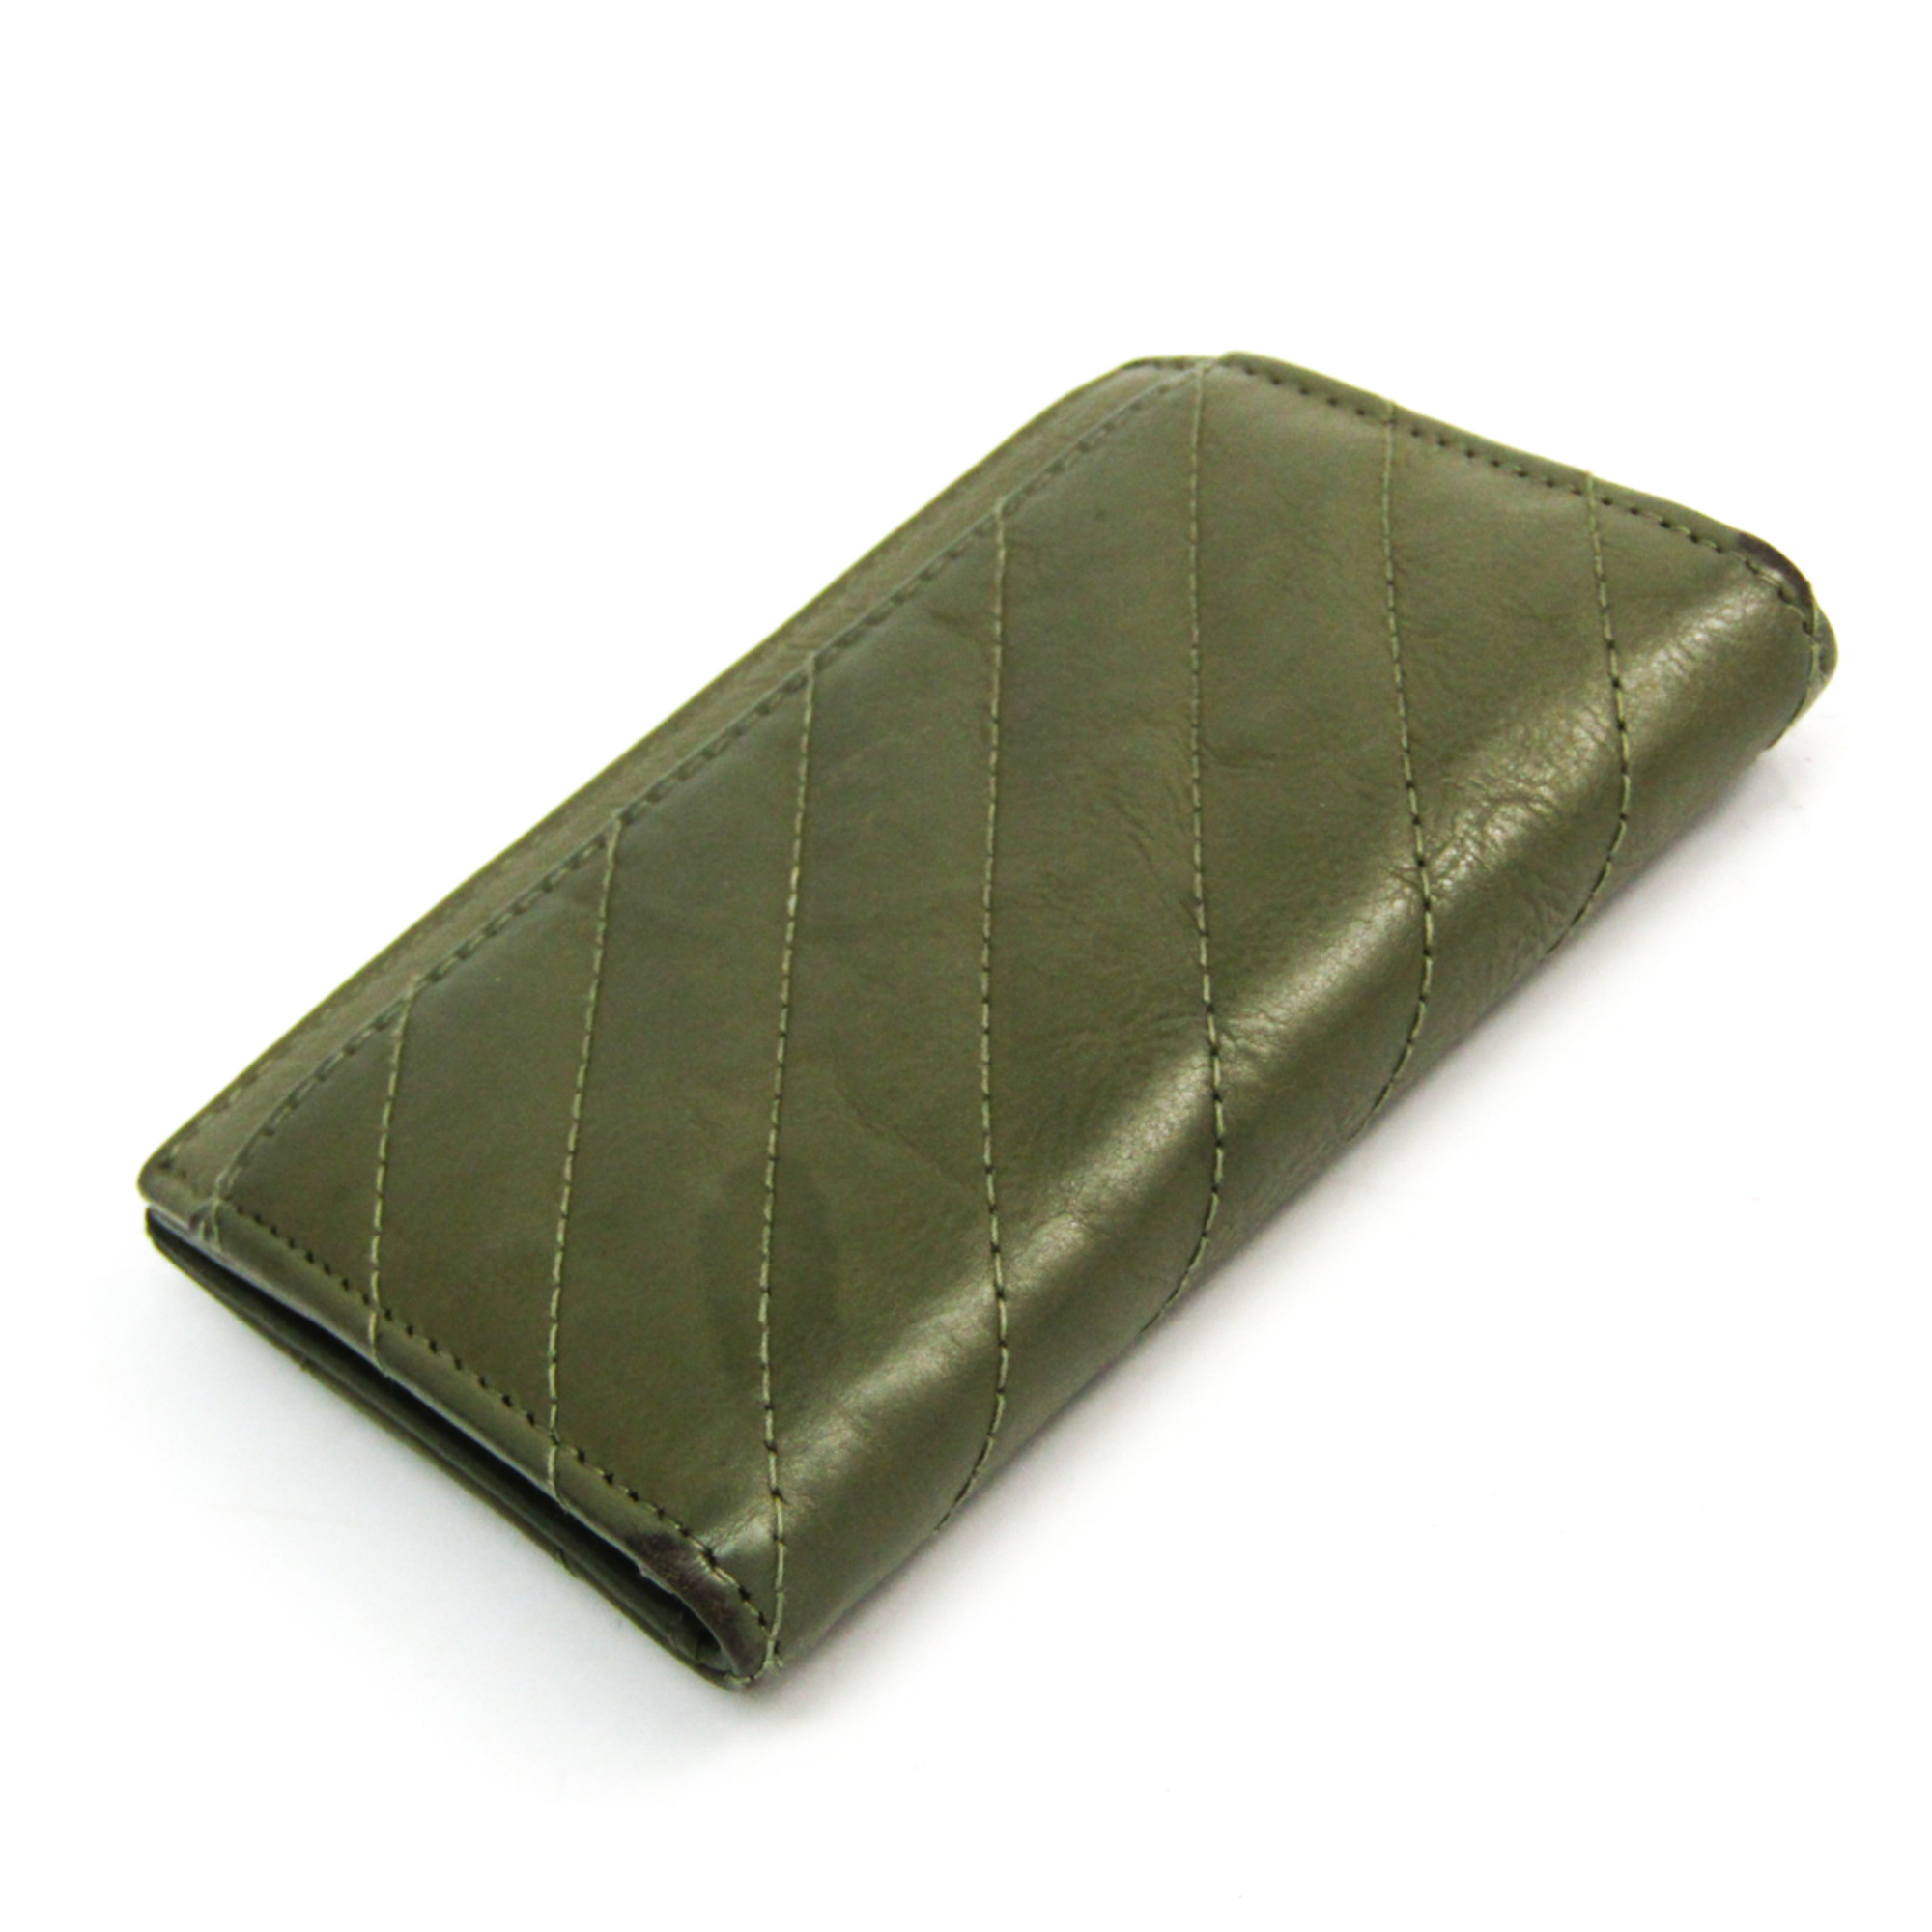 Chanel V Stitch Leather Business Card Case Dark Green